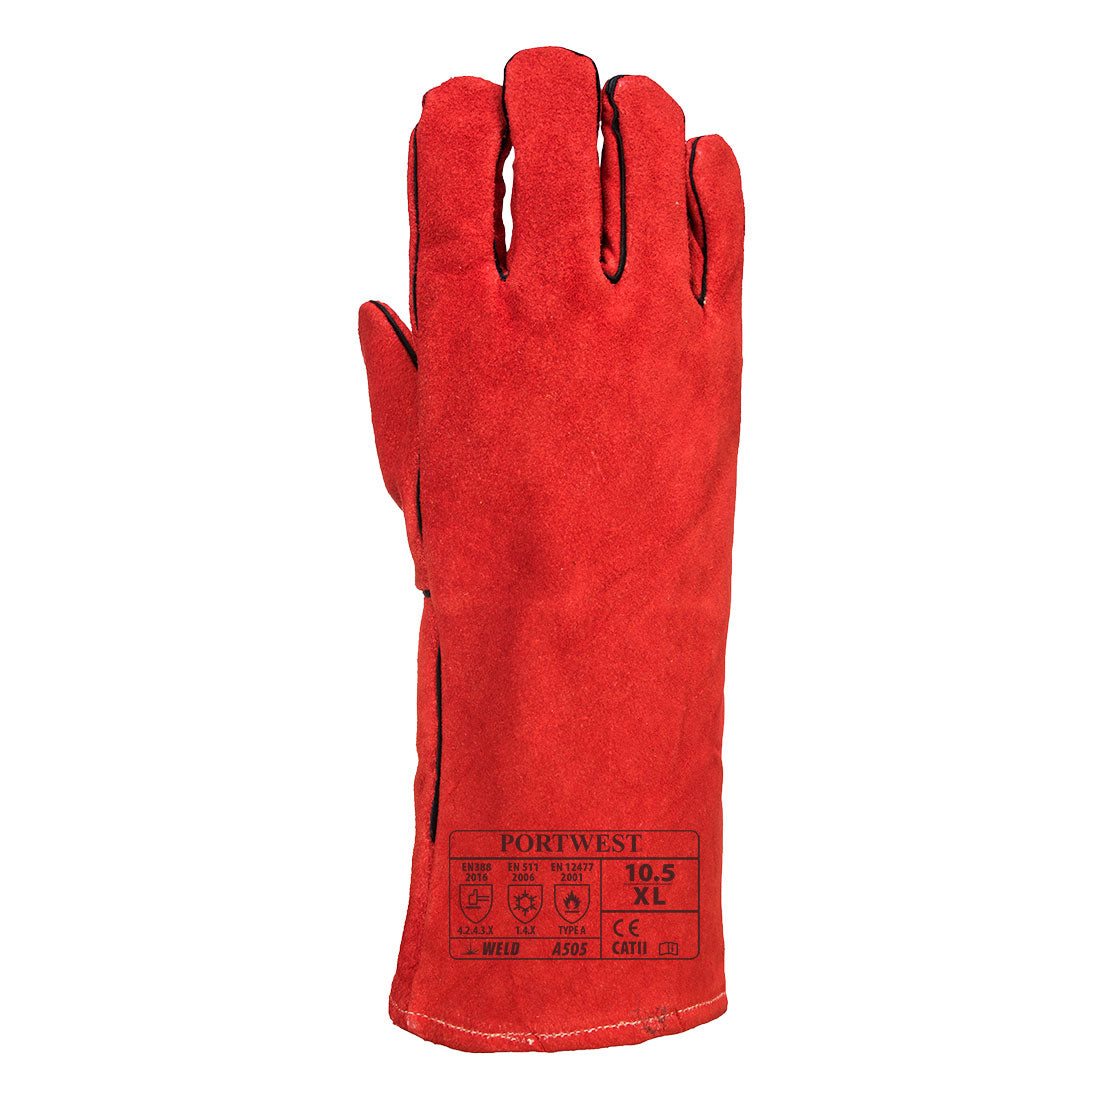 Portwest A505 Winter Welding Gauntlet Gloves Size XL